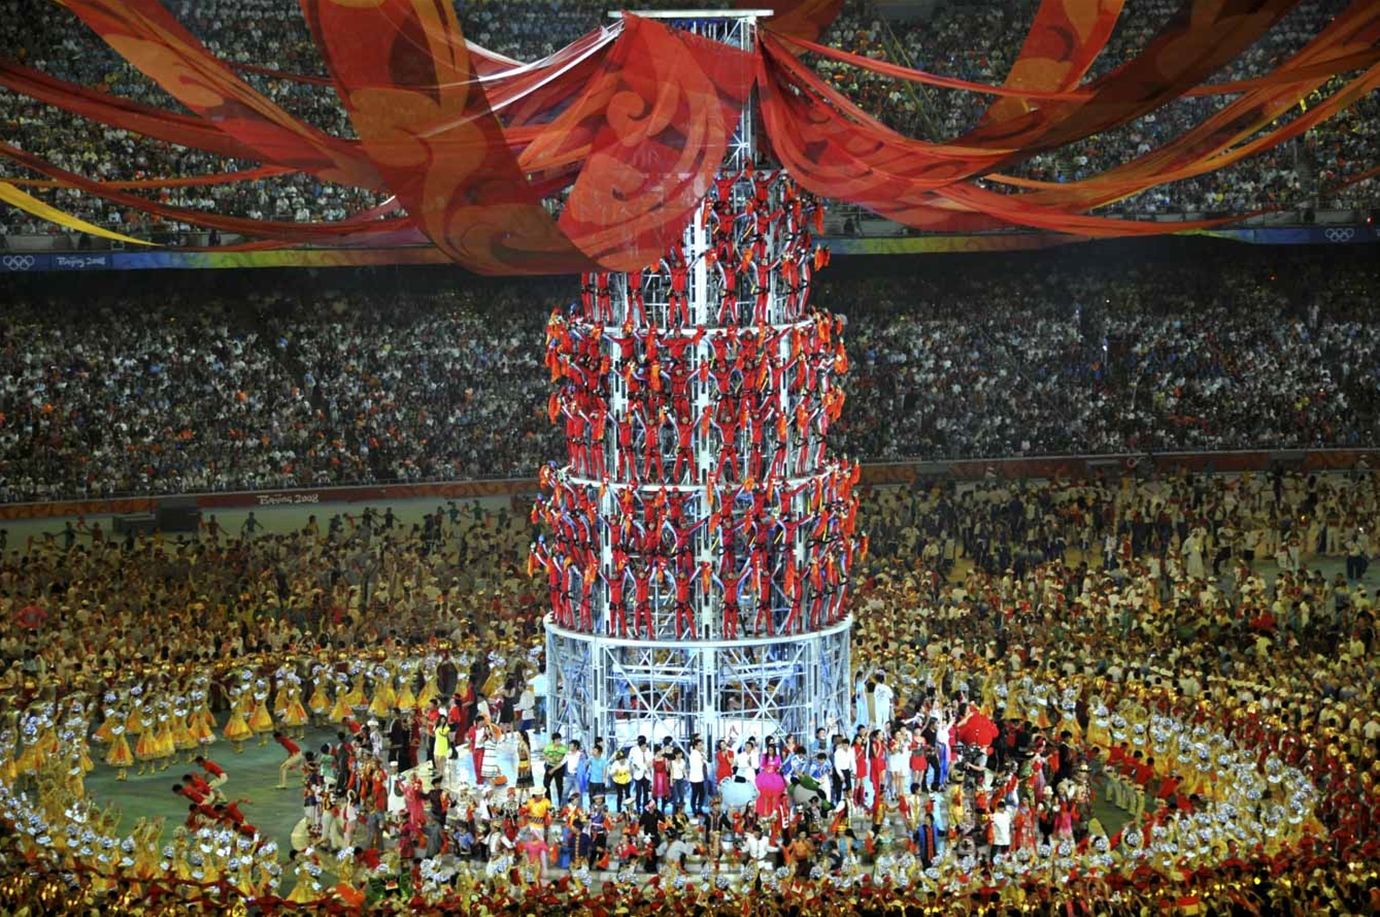 Beijing 2008 Closing Ceremony: